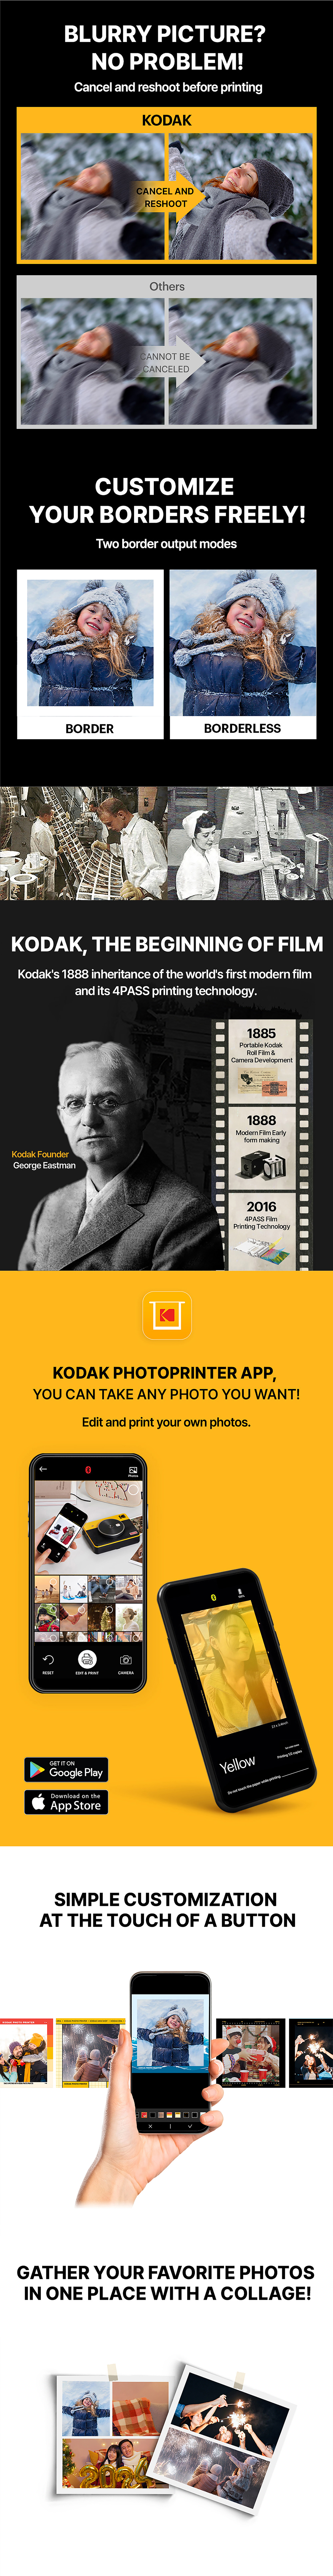 KODAK Mini Shot 3 Retro 4PASS 2-in-1 Instant Digital Camera and Photo  Printer (3x3 inches) + 68 Sheets Gift Bundle, Yellow (NOT Zink) - Yahoo  Shopping